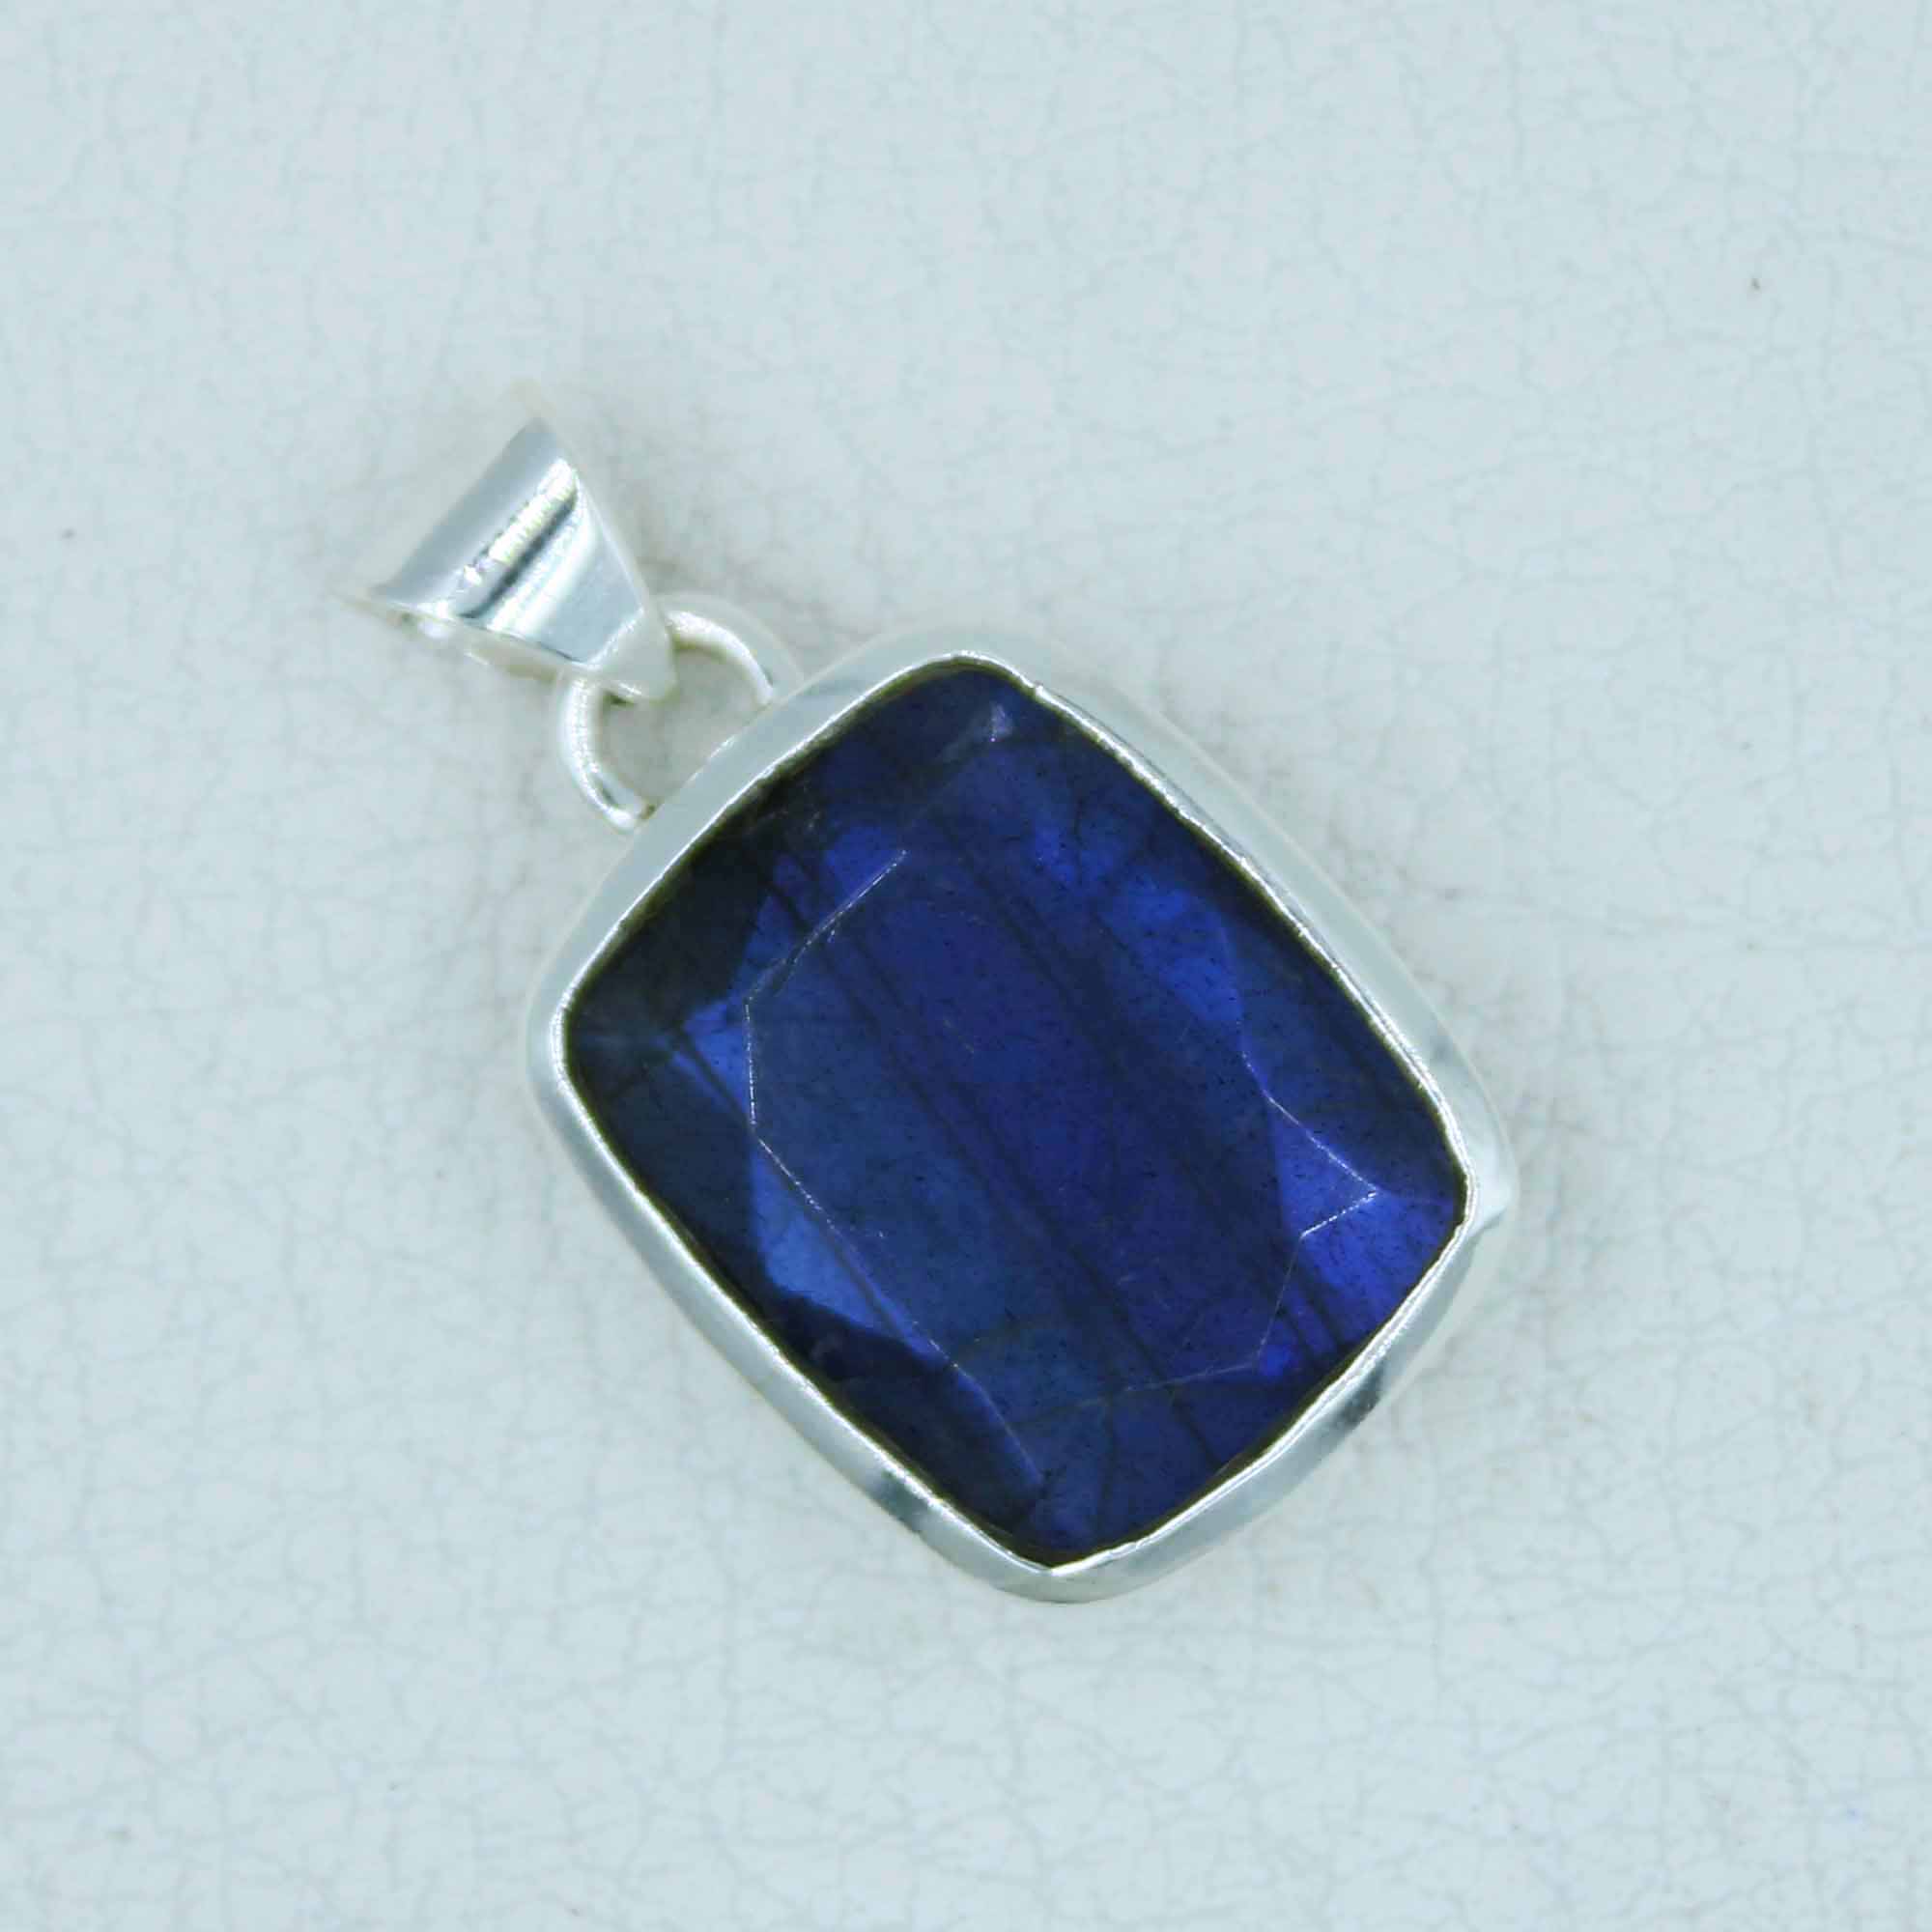 Faceted Blue Labradorite Pendant